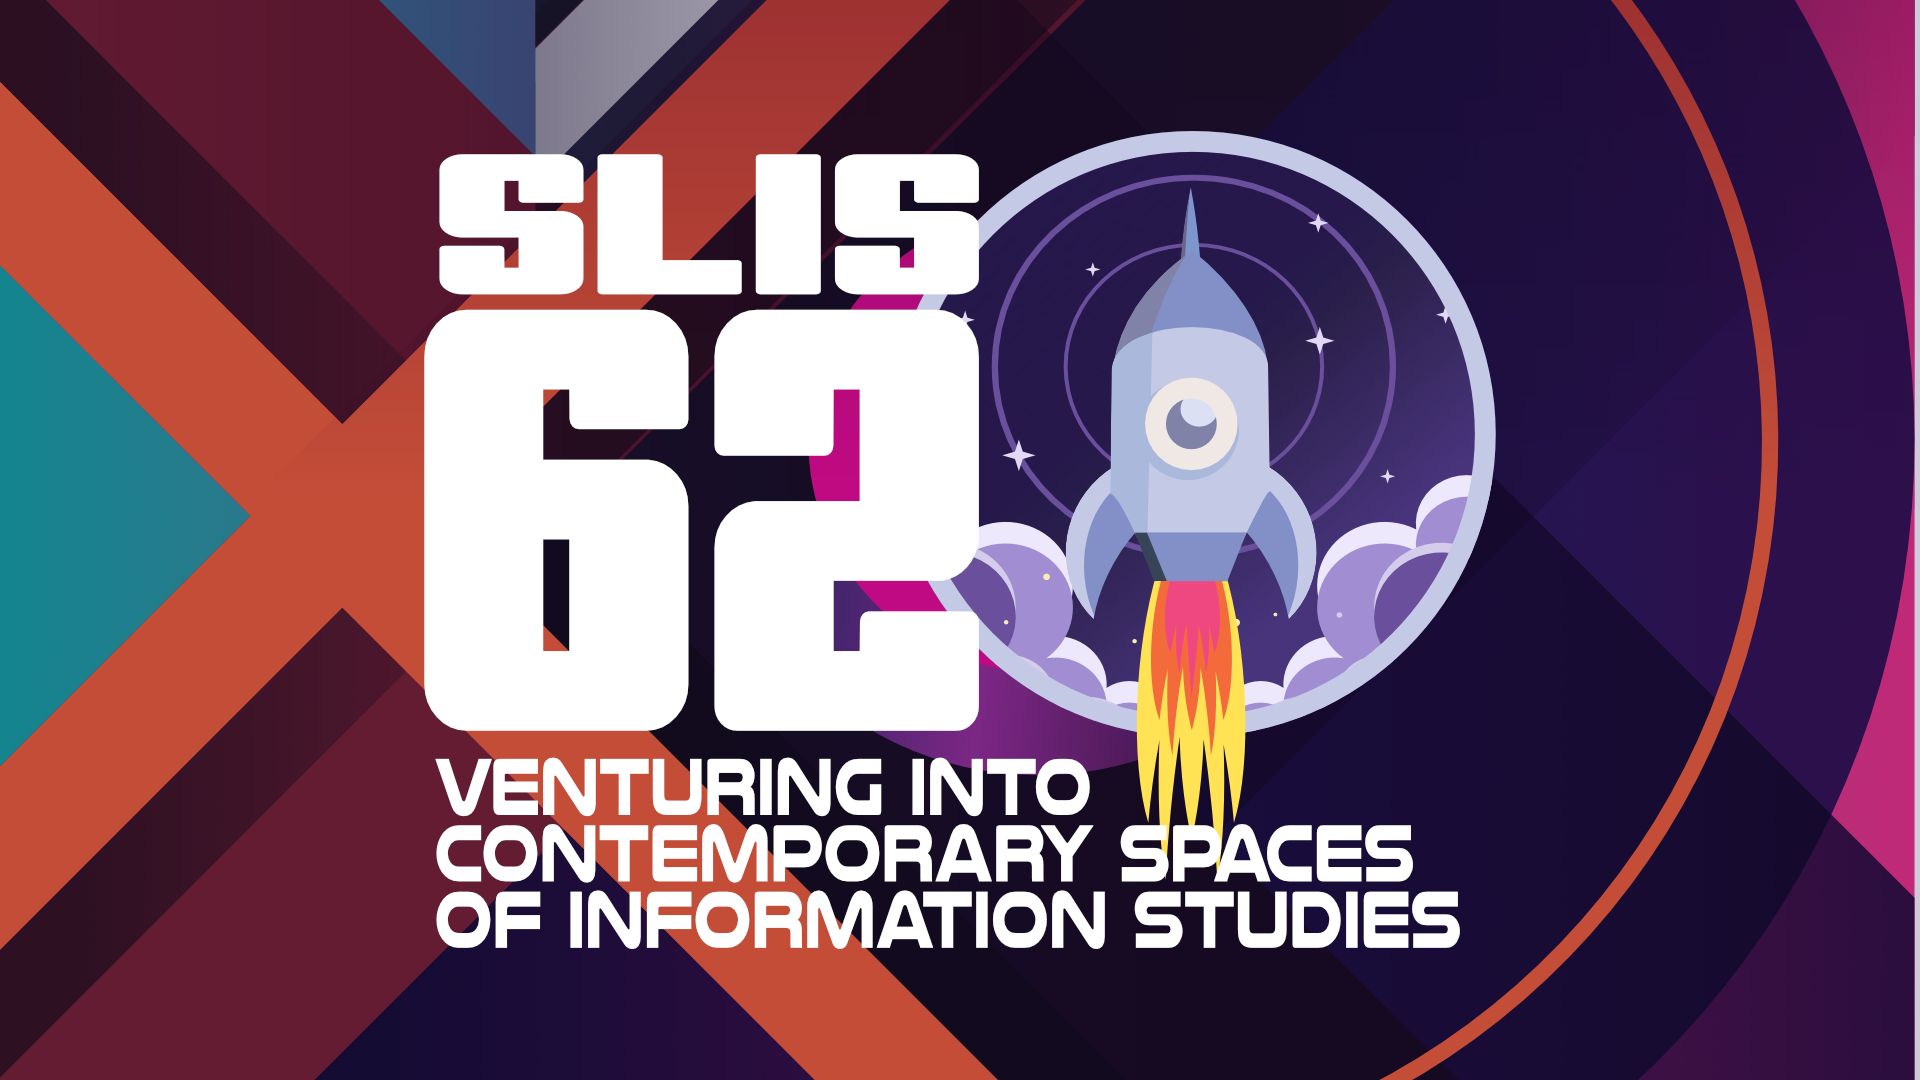 SLIS celebrate 62 Years